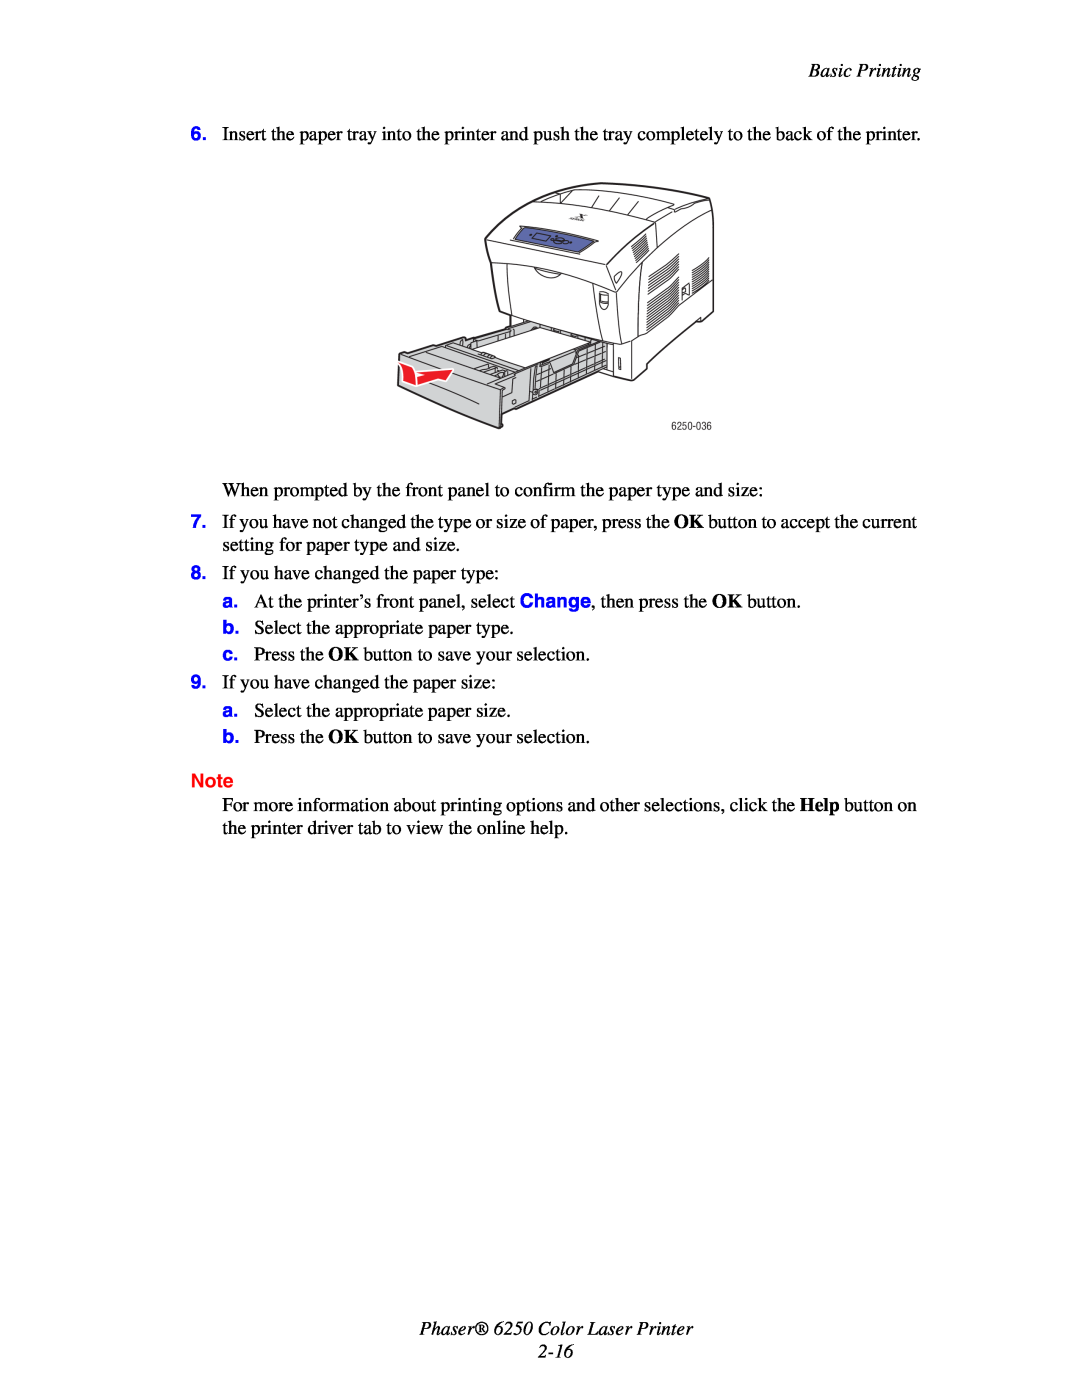 Xerox manual Phaser 6250 Color Laser Printer 2-16, Basic Printing 